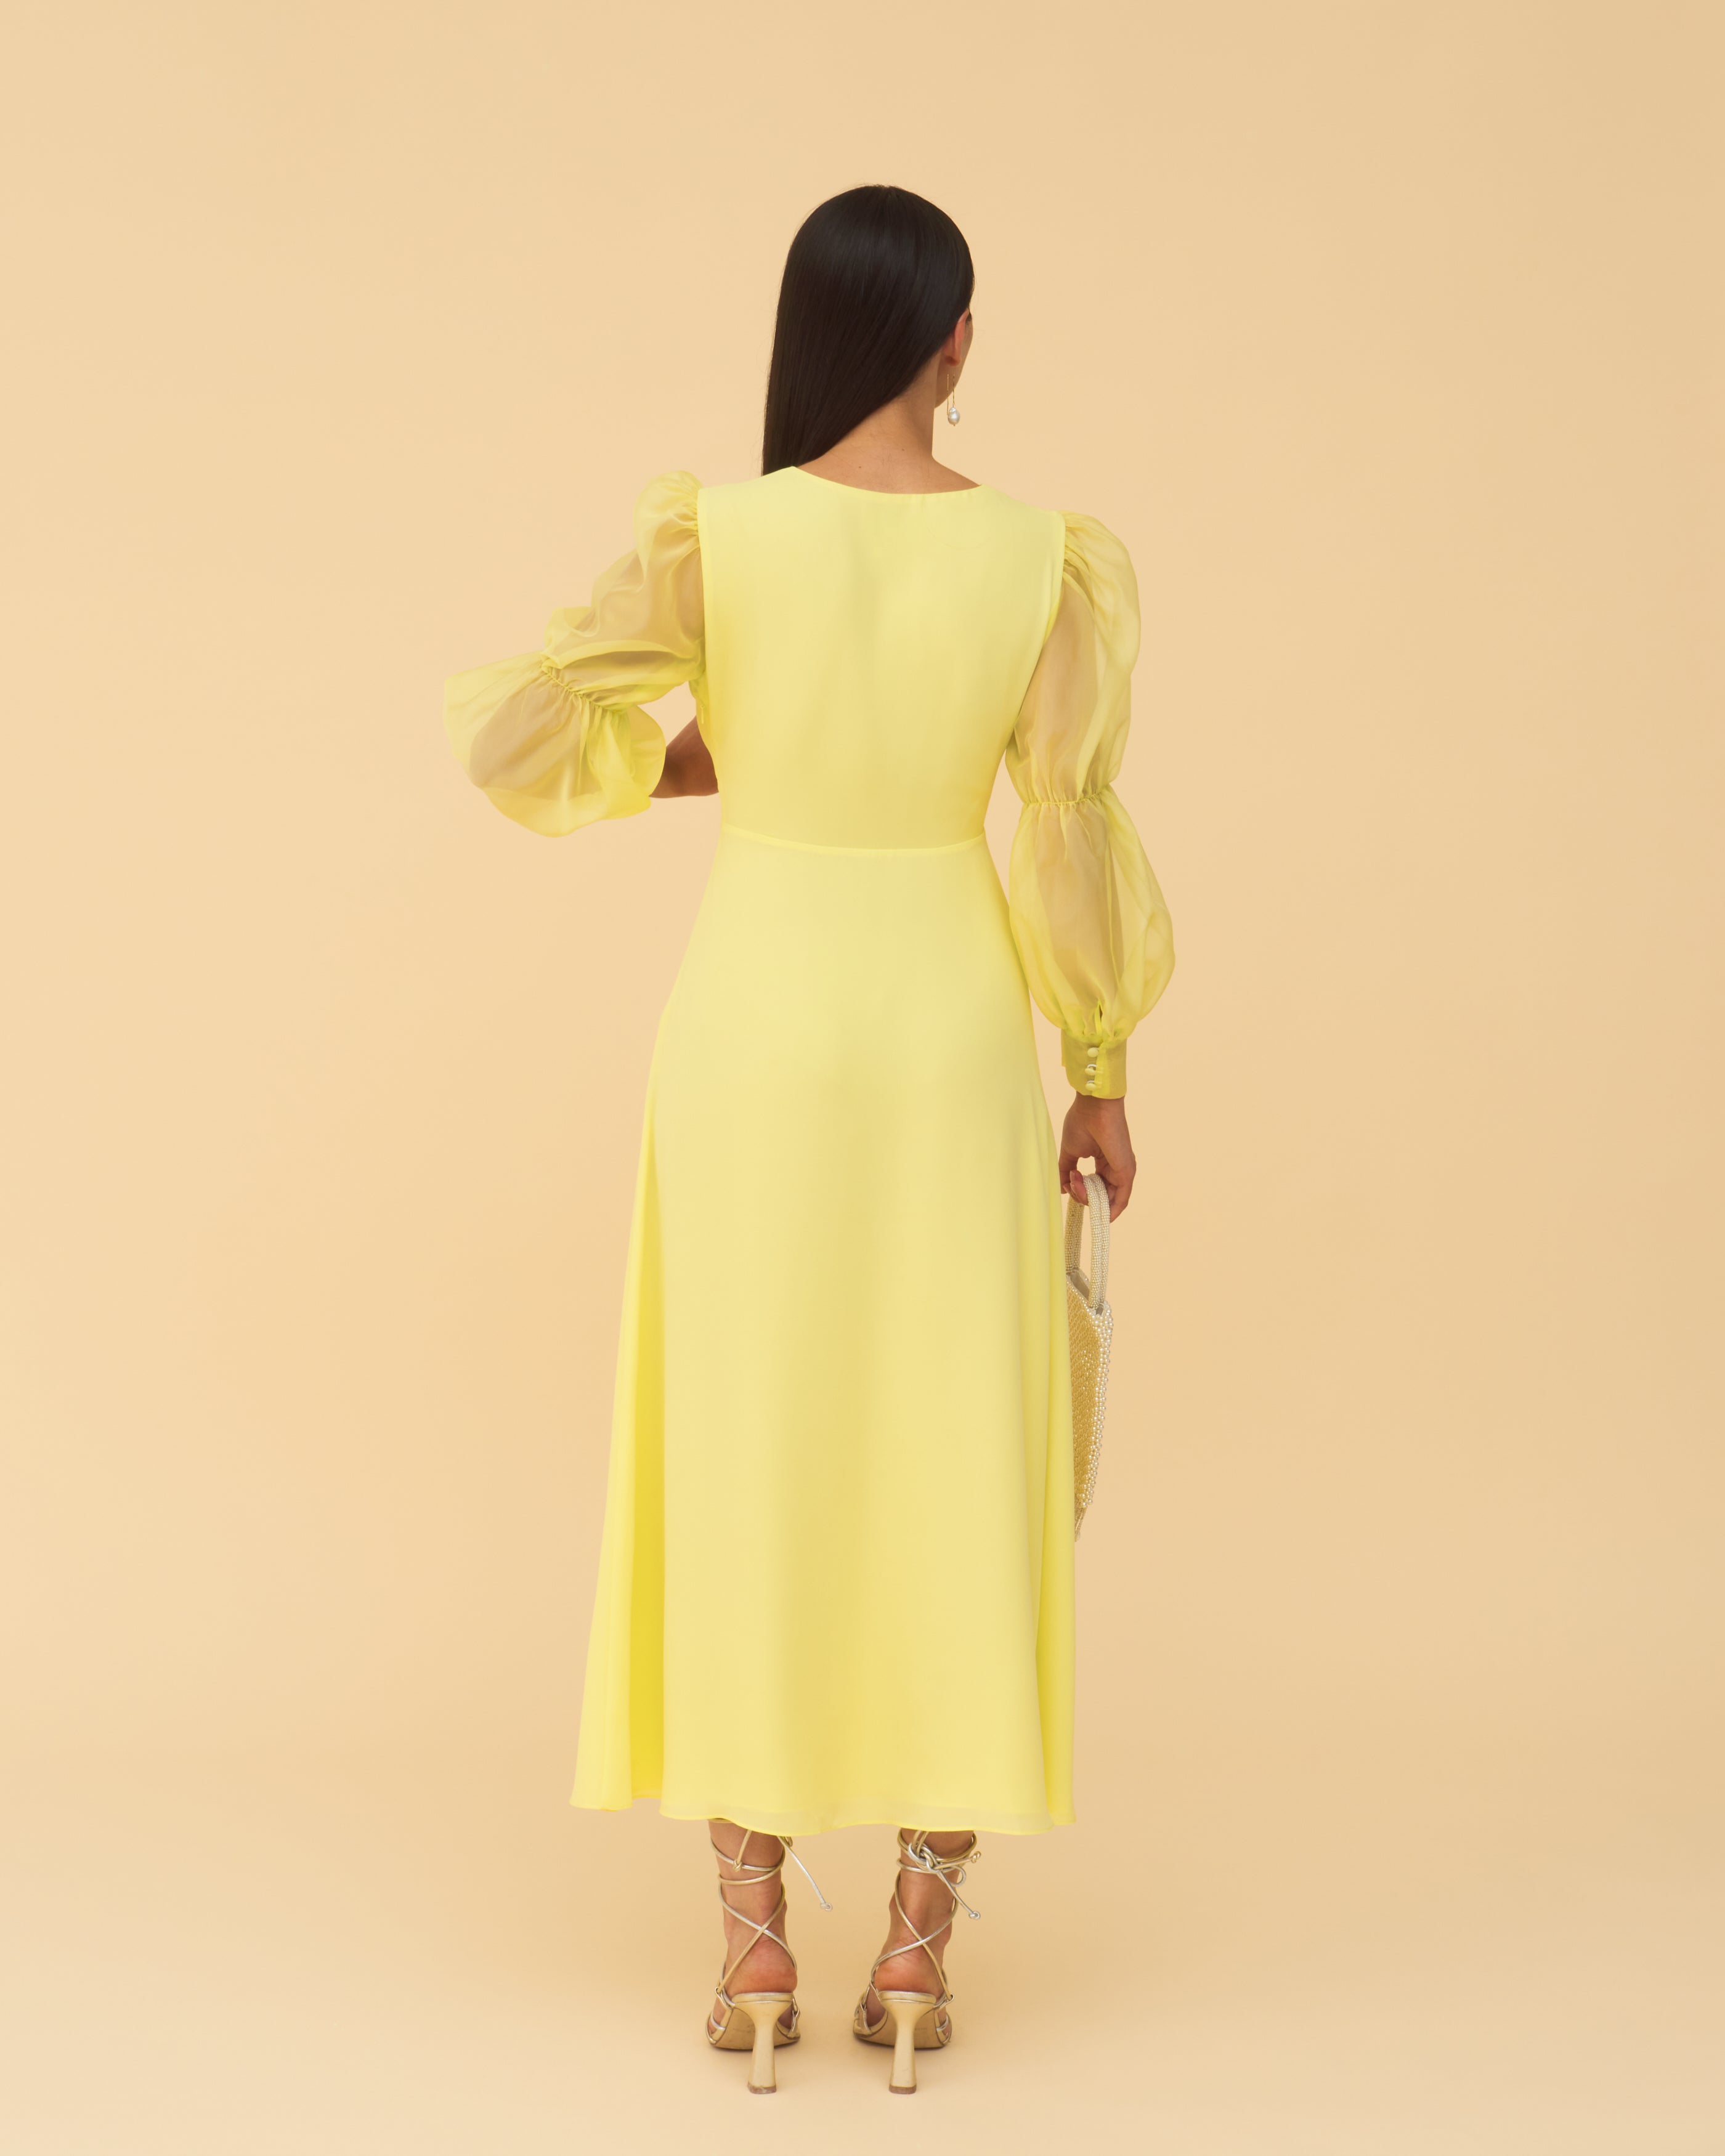 Jacinto Yellow Dress